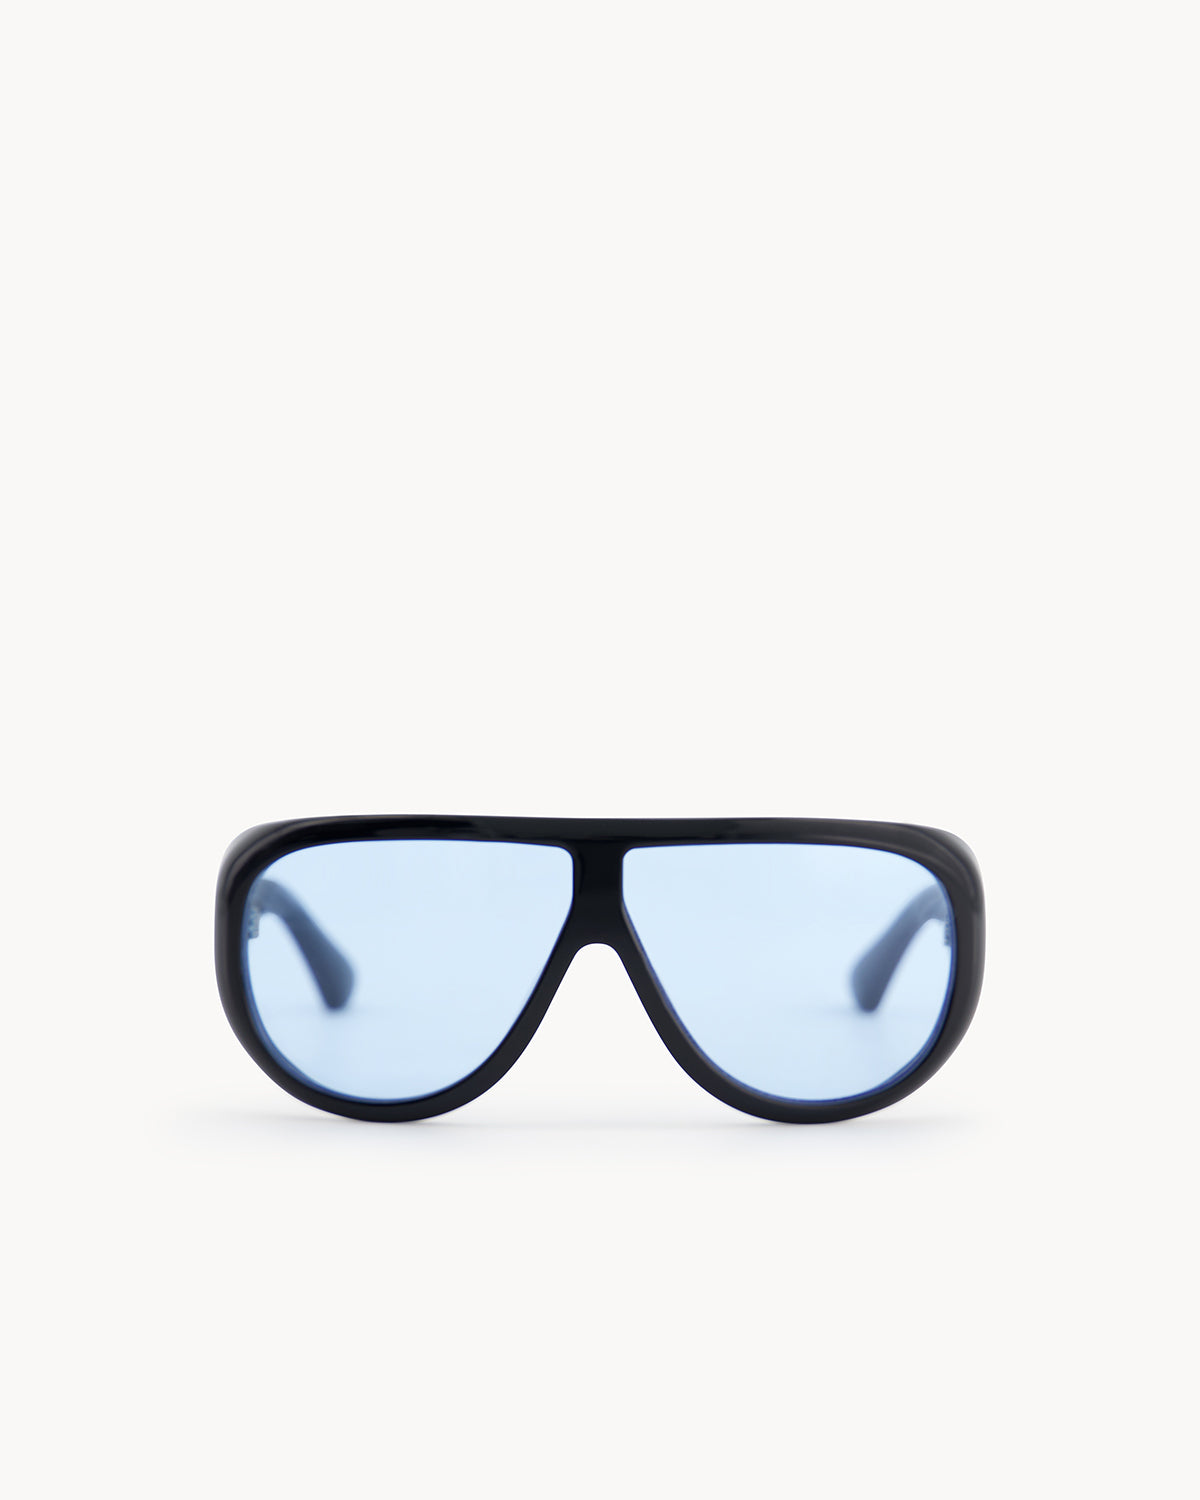 Port Tanger Gambia Sunglasses in Black Acetate and Rif Blue Lenses 1